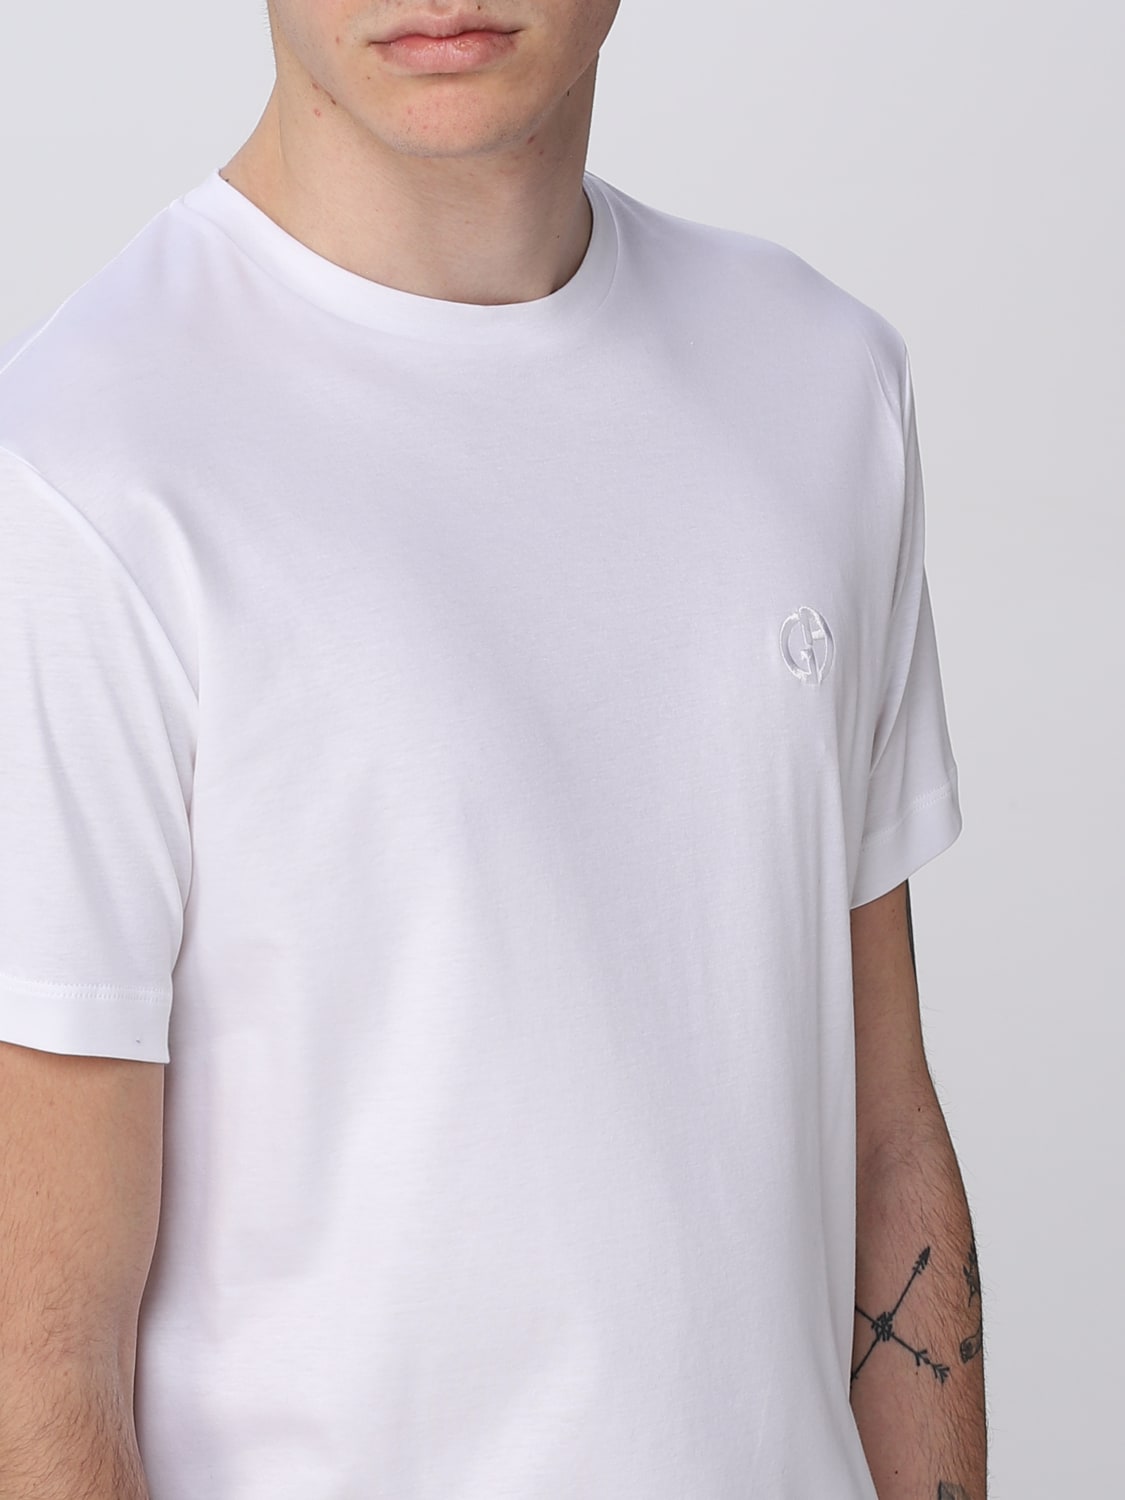 Giorgio Armani Outlet: t-shirt for man - White  Giorgio Armani t-shirt  3HSM72SJTKZ online at